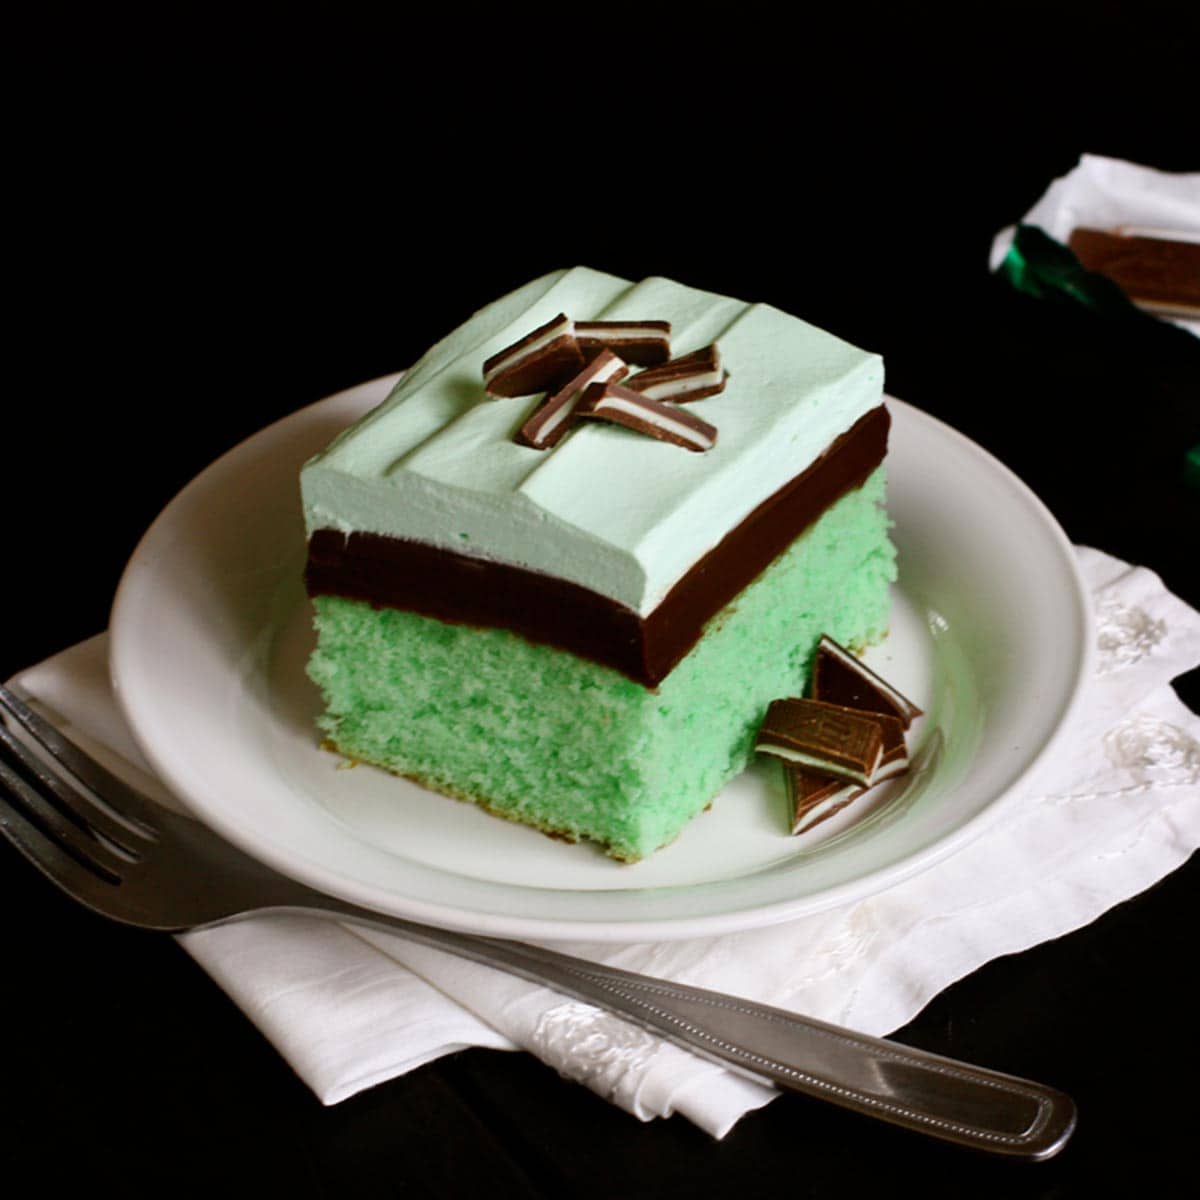 mint and chocolate cake dessert